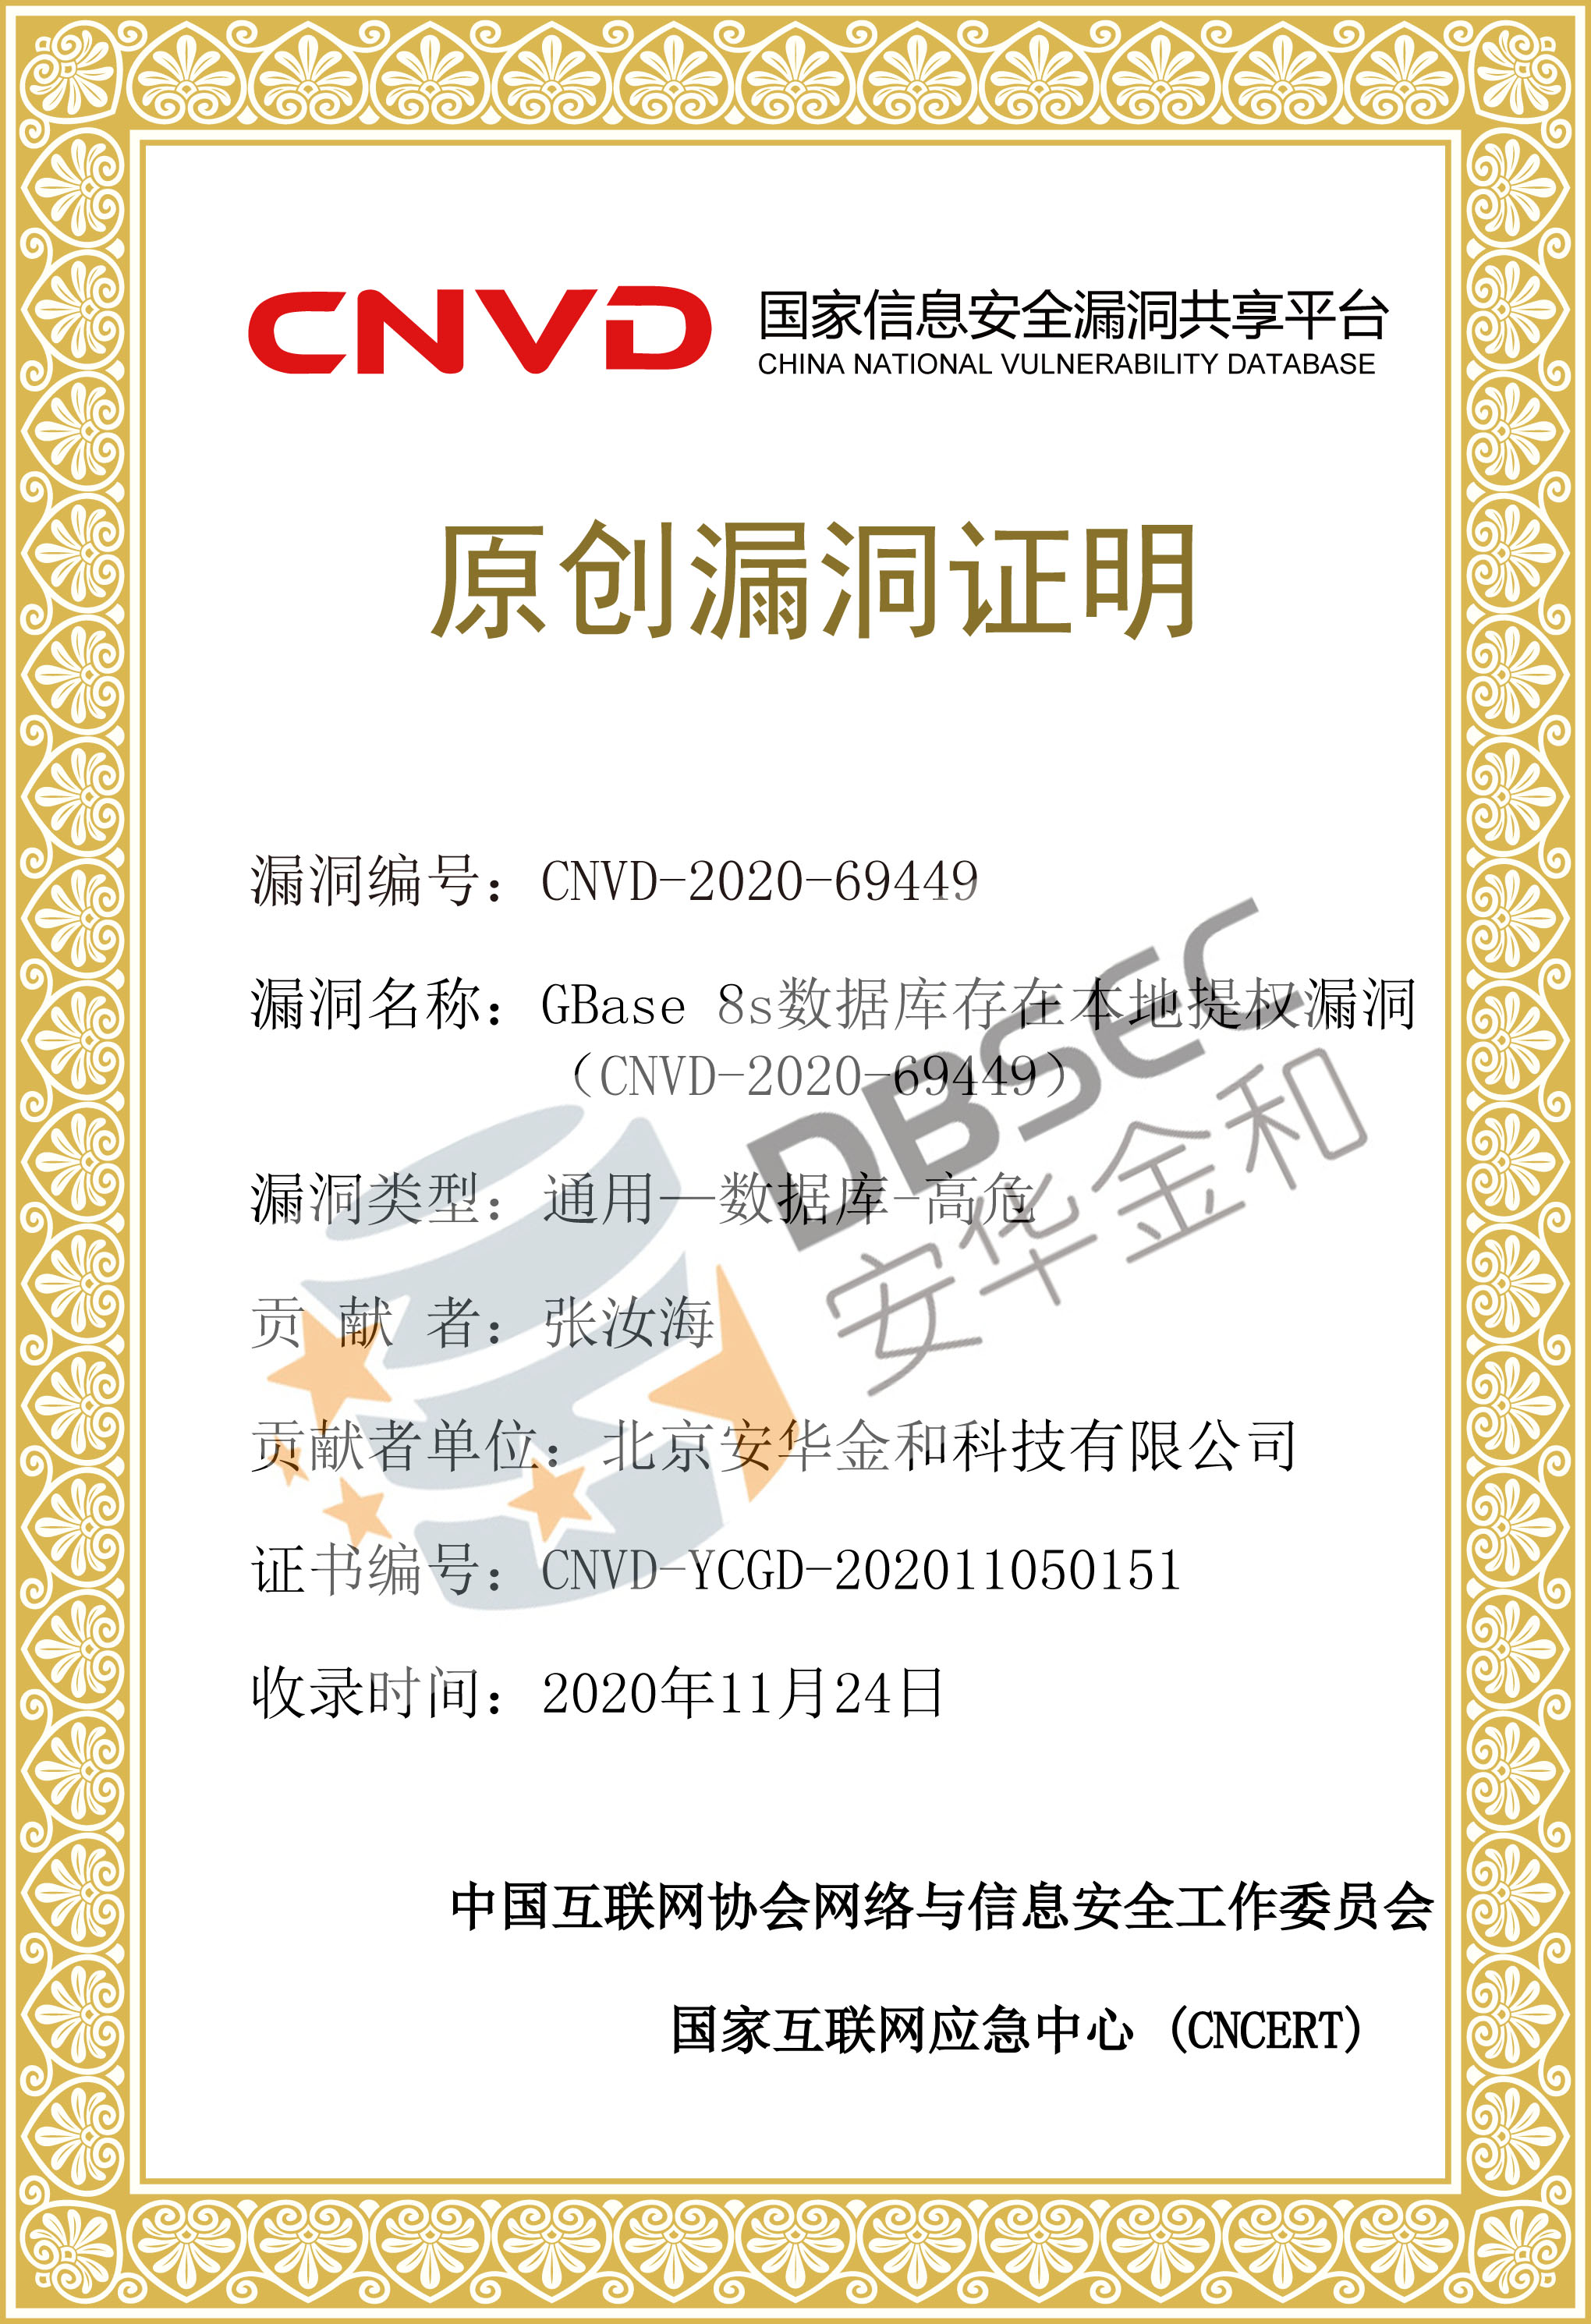 CNVD-YCGD-202011050151